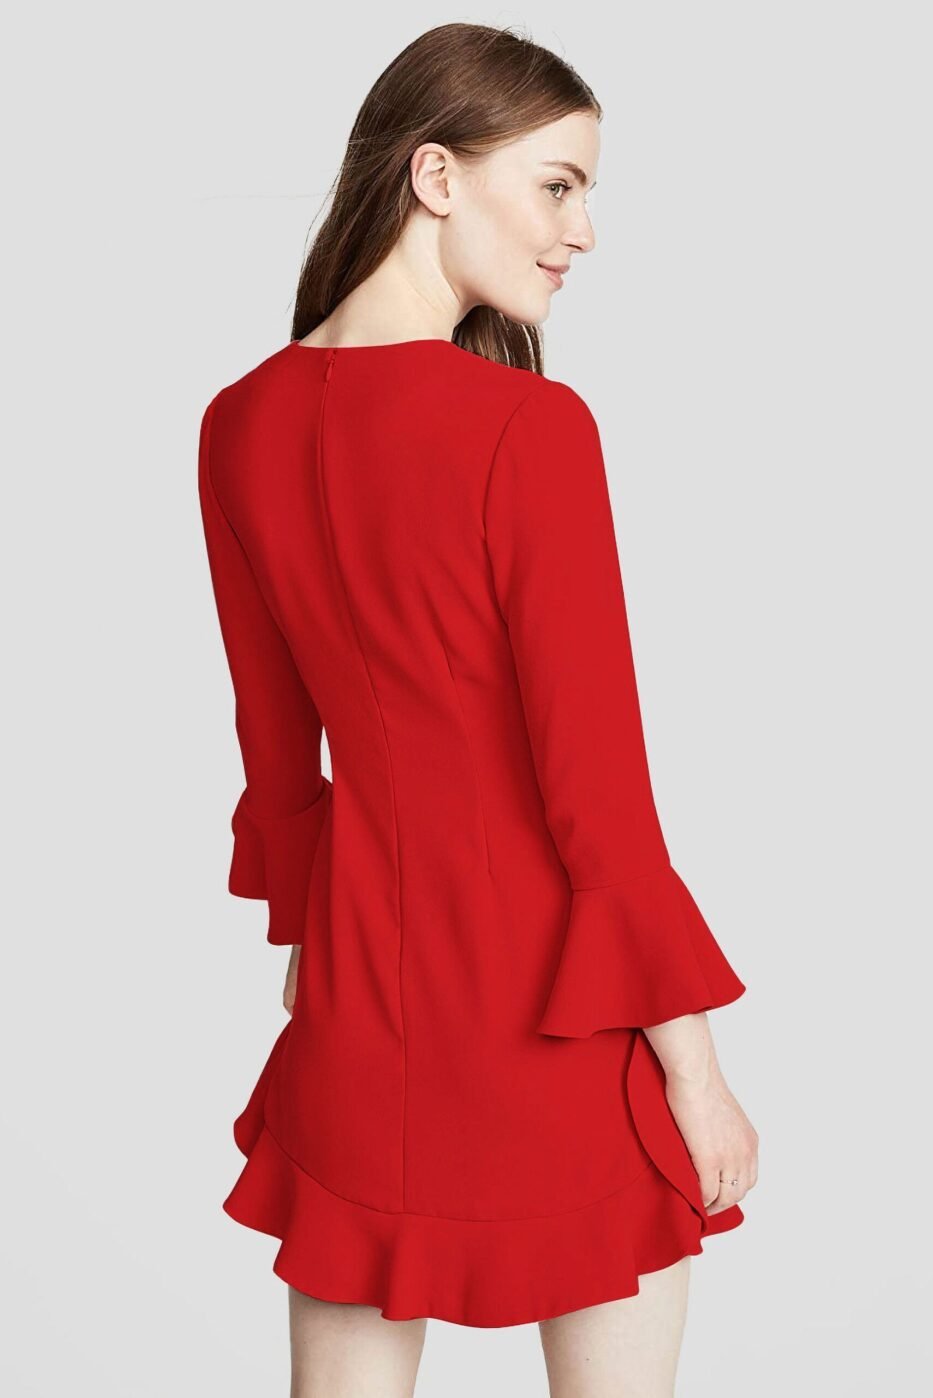 fashion-designer-red-dress